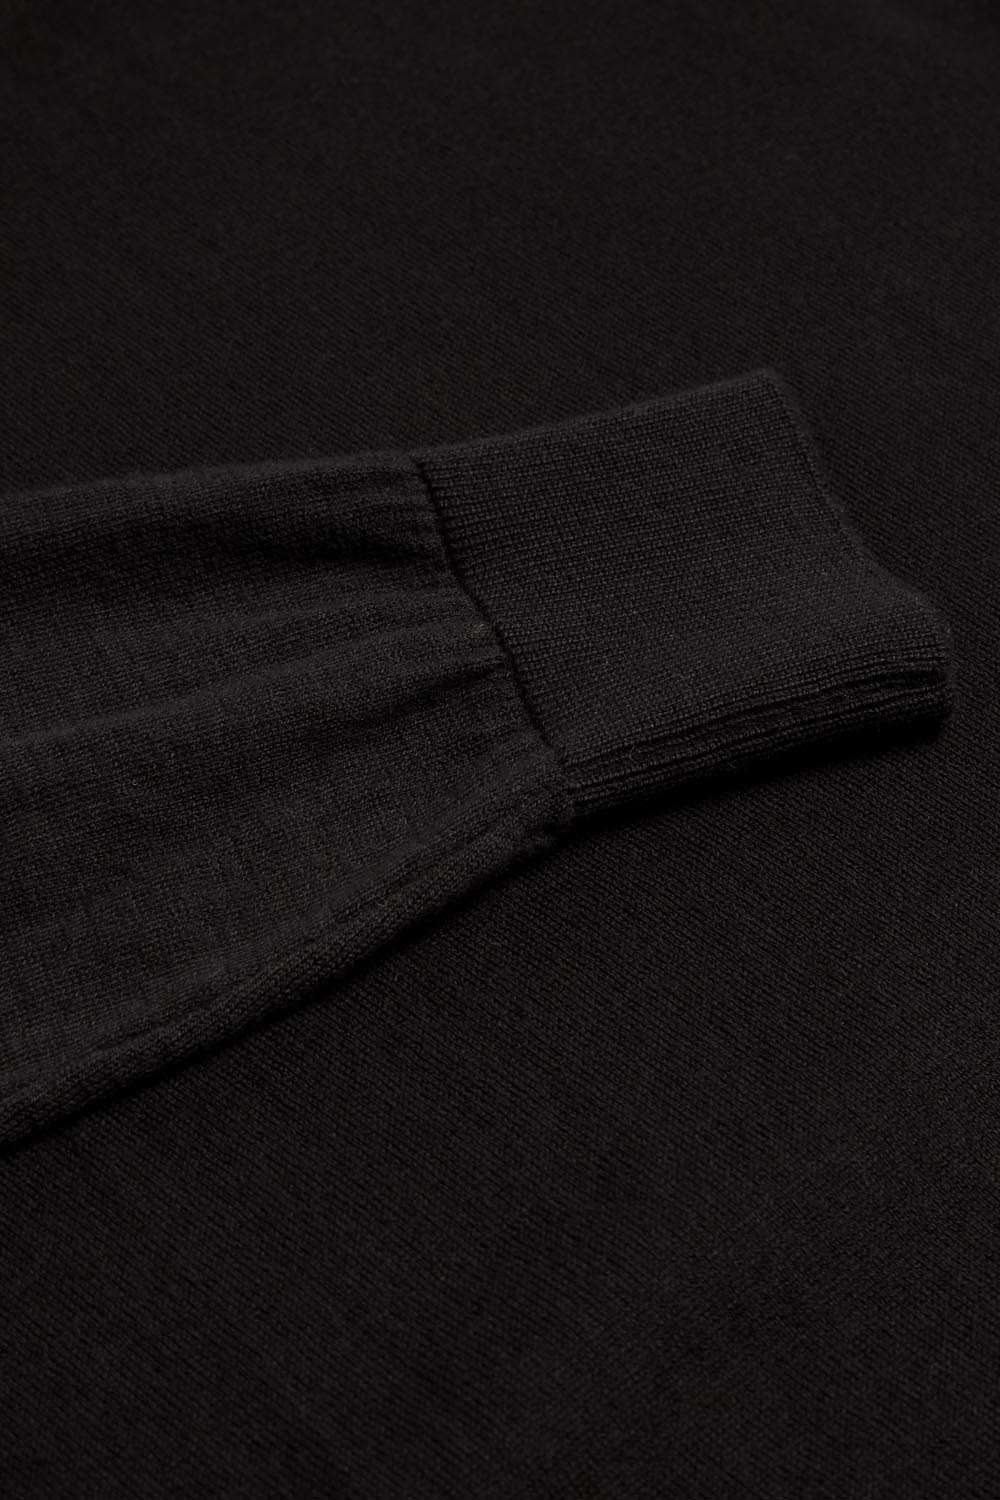 Dax Black Rollneck Sweater - Tom Murphy's Formal and Menswear